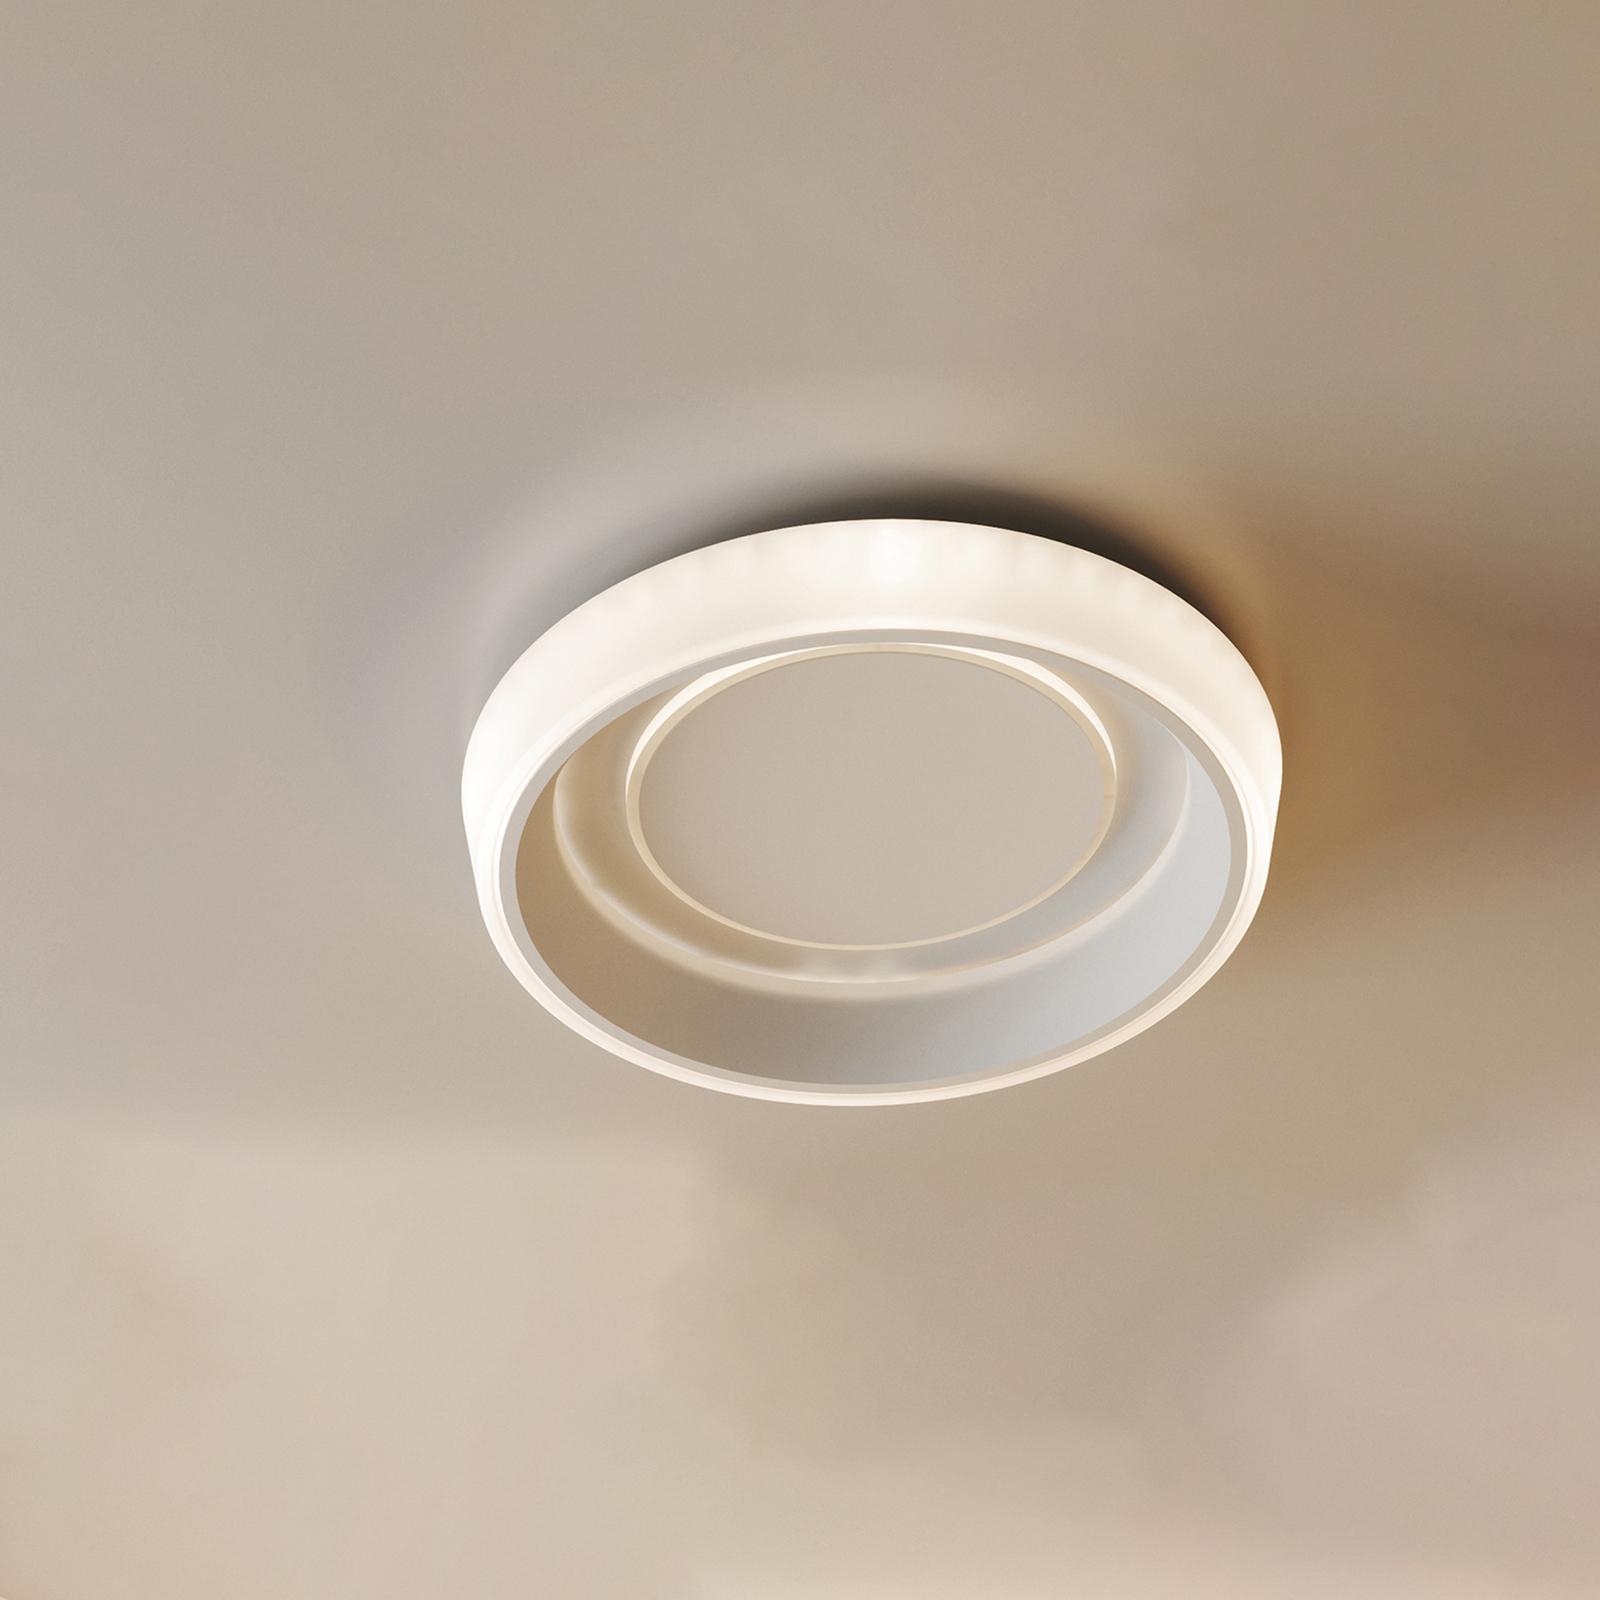 Nurax LED ceiling light selectable light colour, round